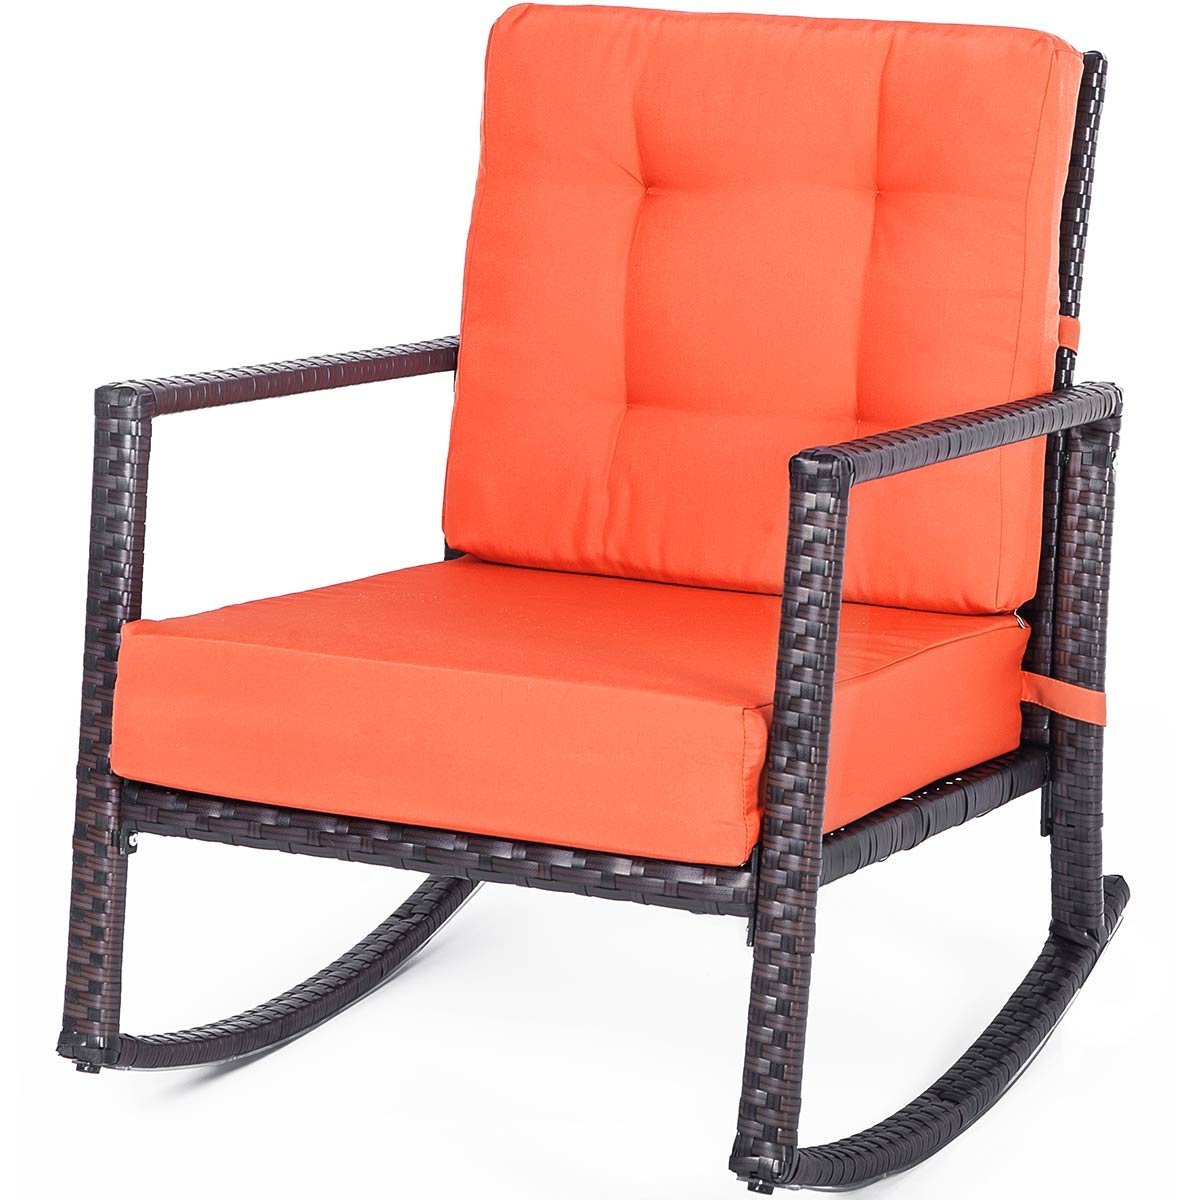 Merax Cushioned Rattan Rocker Chair Patio Glider Lounge Wicker Chair with Cushion(Orange Cushion) - image 4 of 5